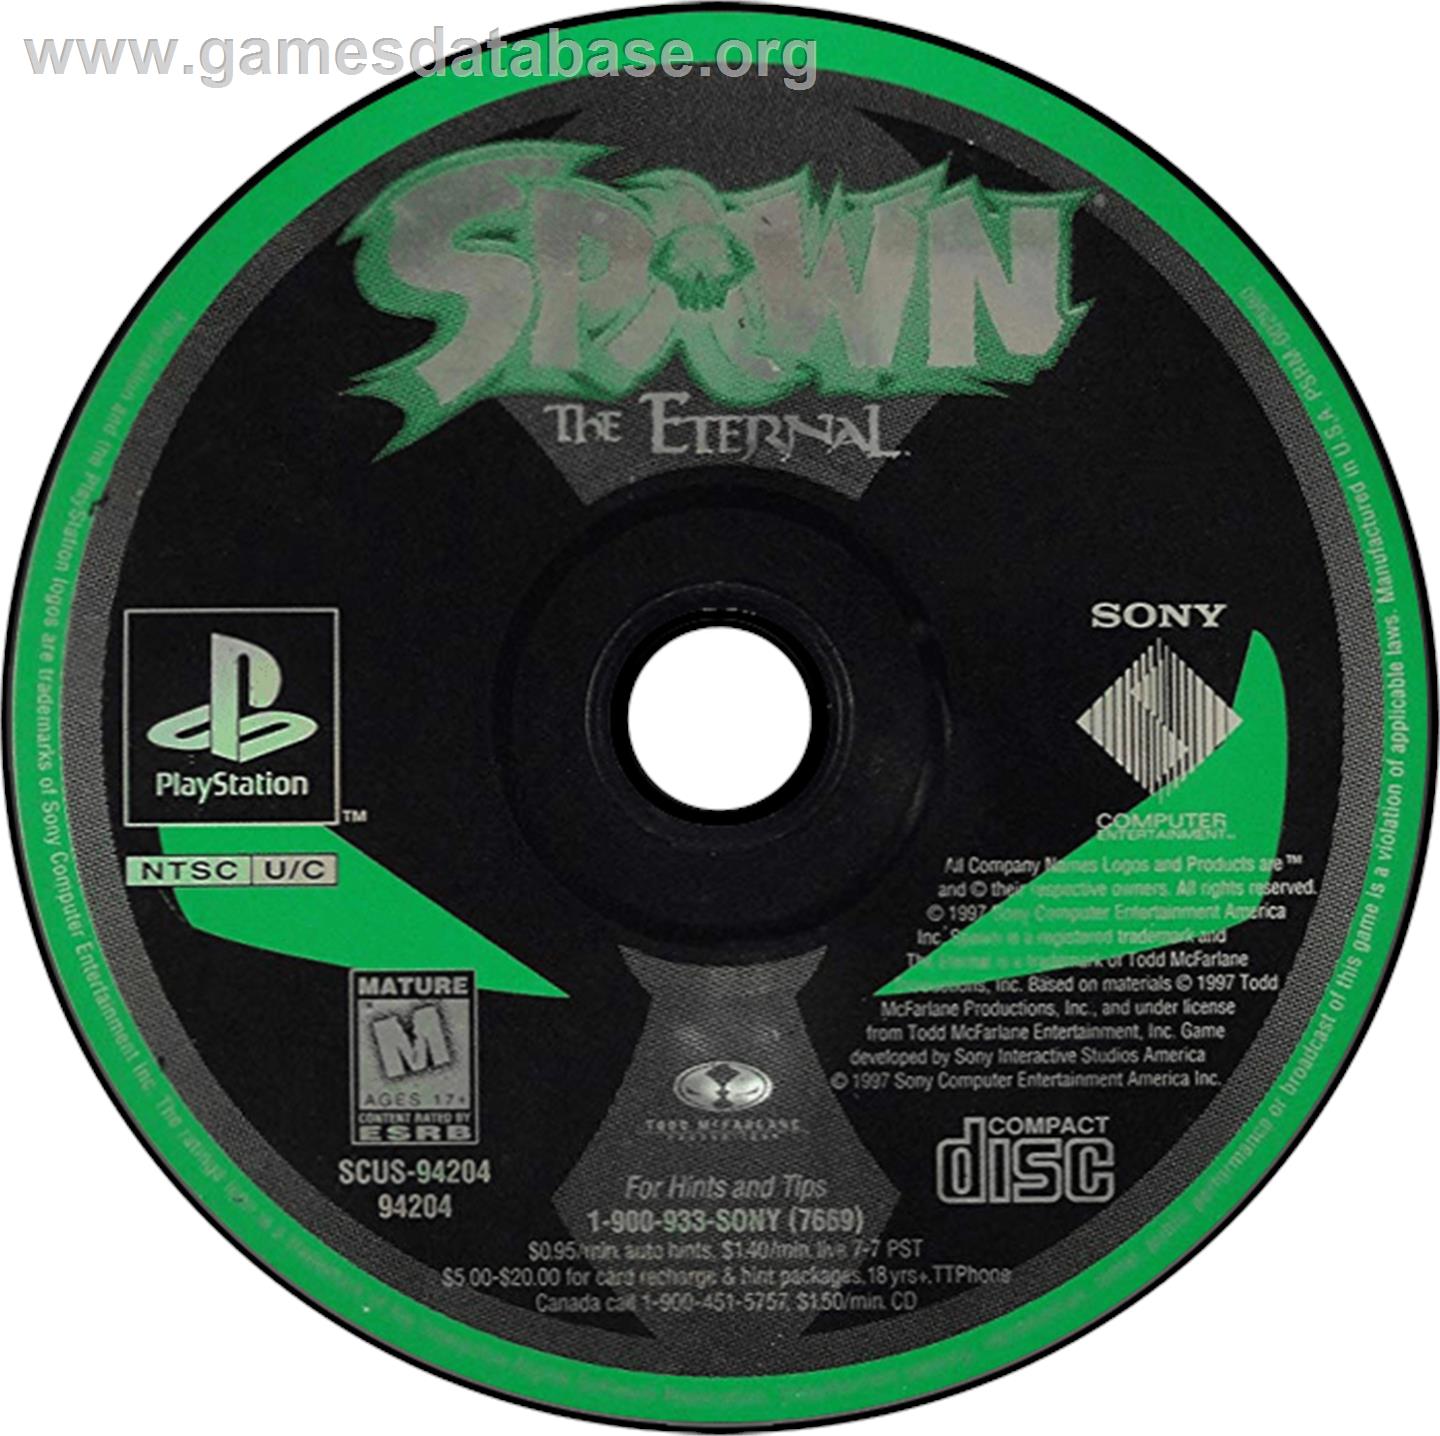 Spawn: The Eternal - Sony Playstation - Artwork - Disc